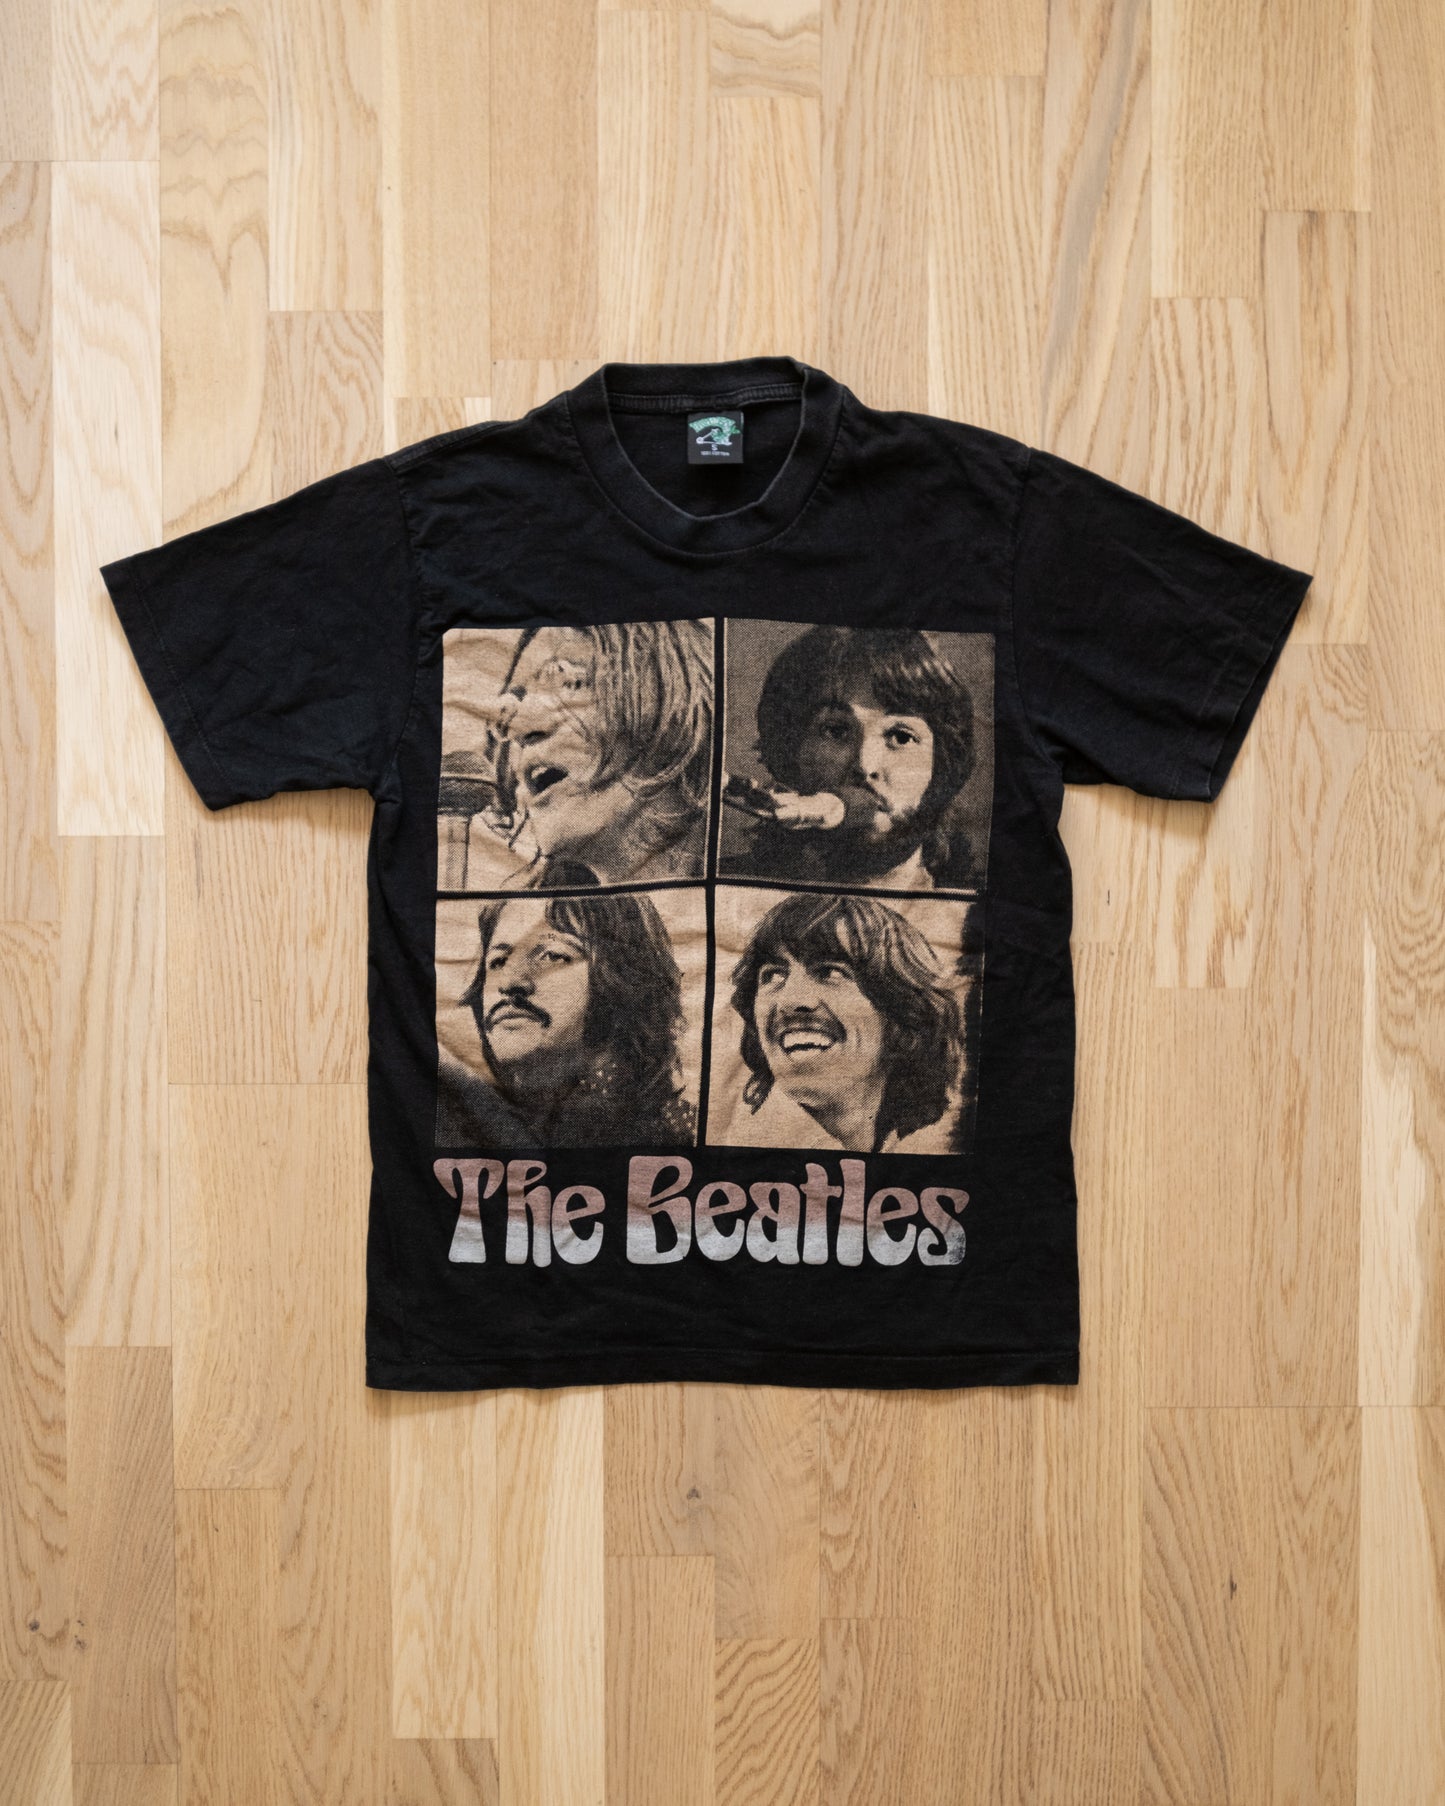 The Beatles x Easyriders Magazine Vintage T-Shirt Size S